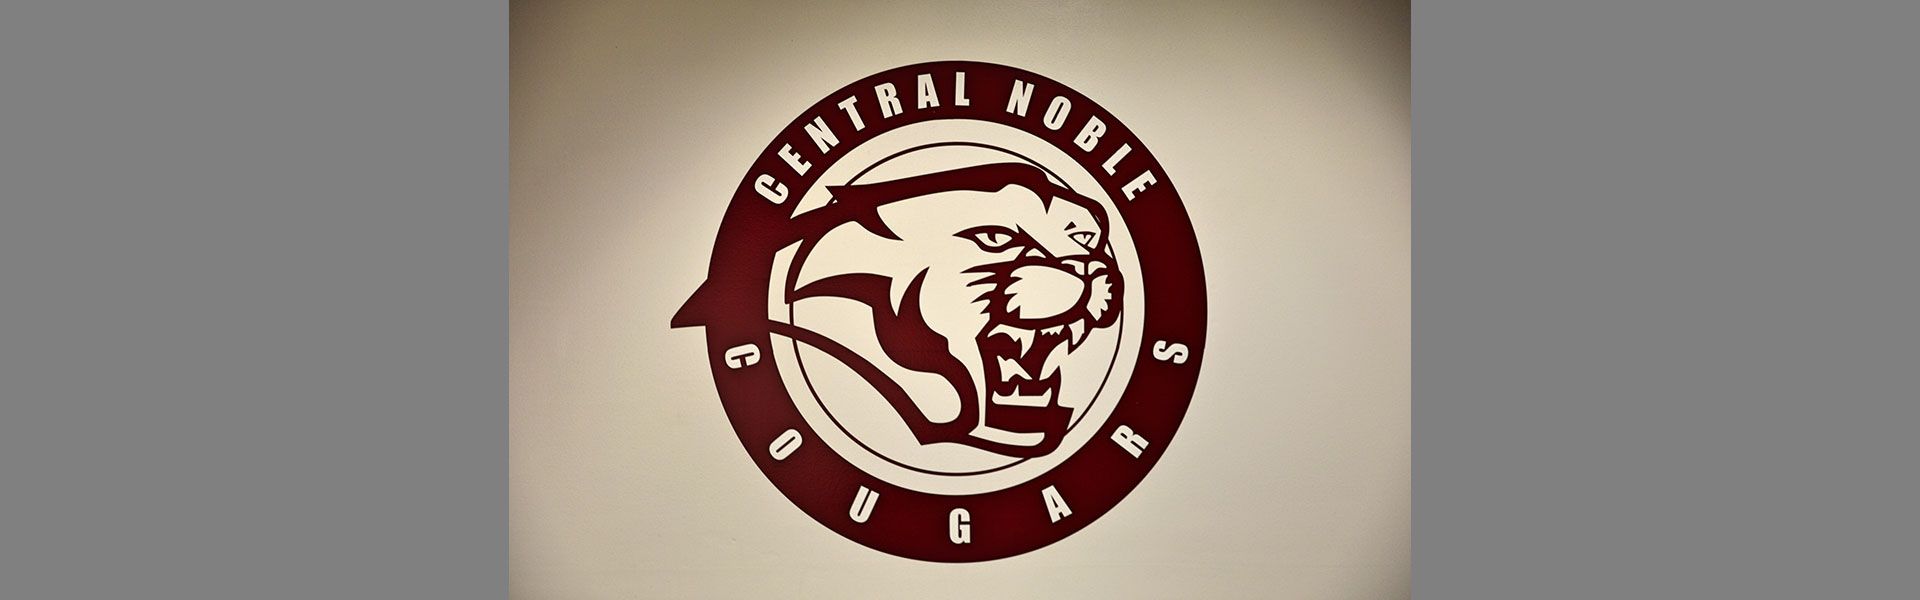 Central Noble Logo